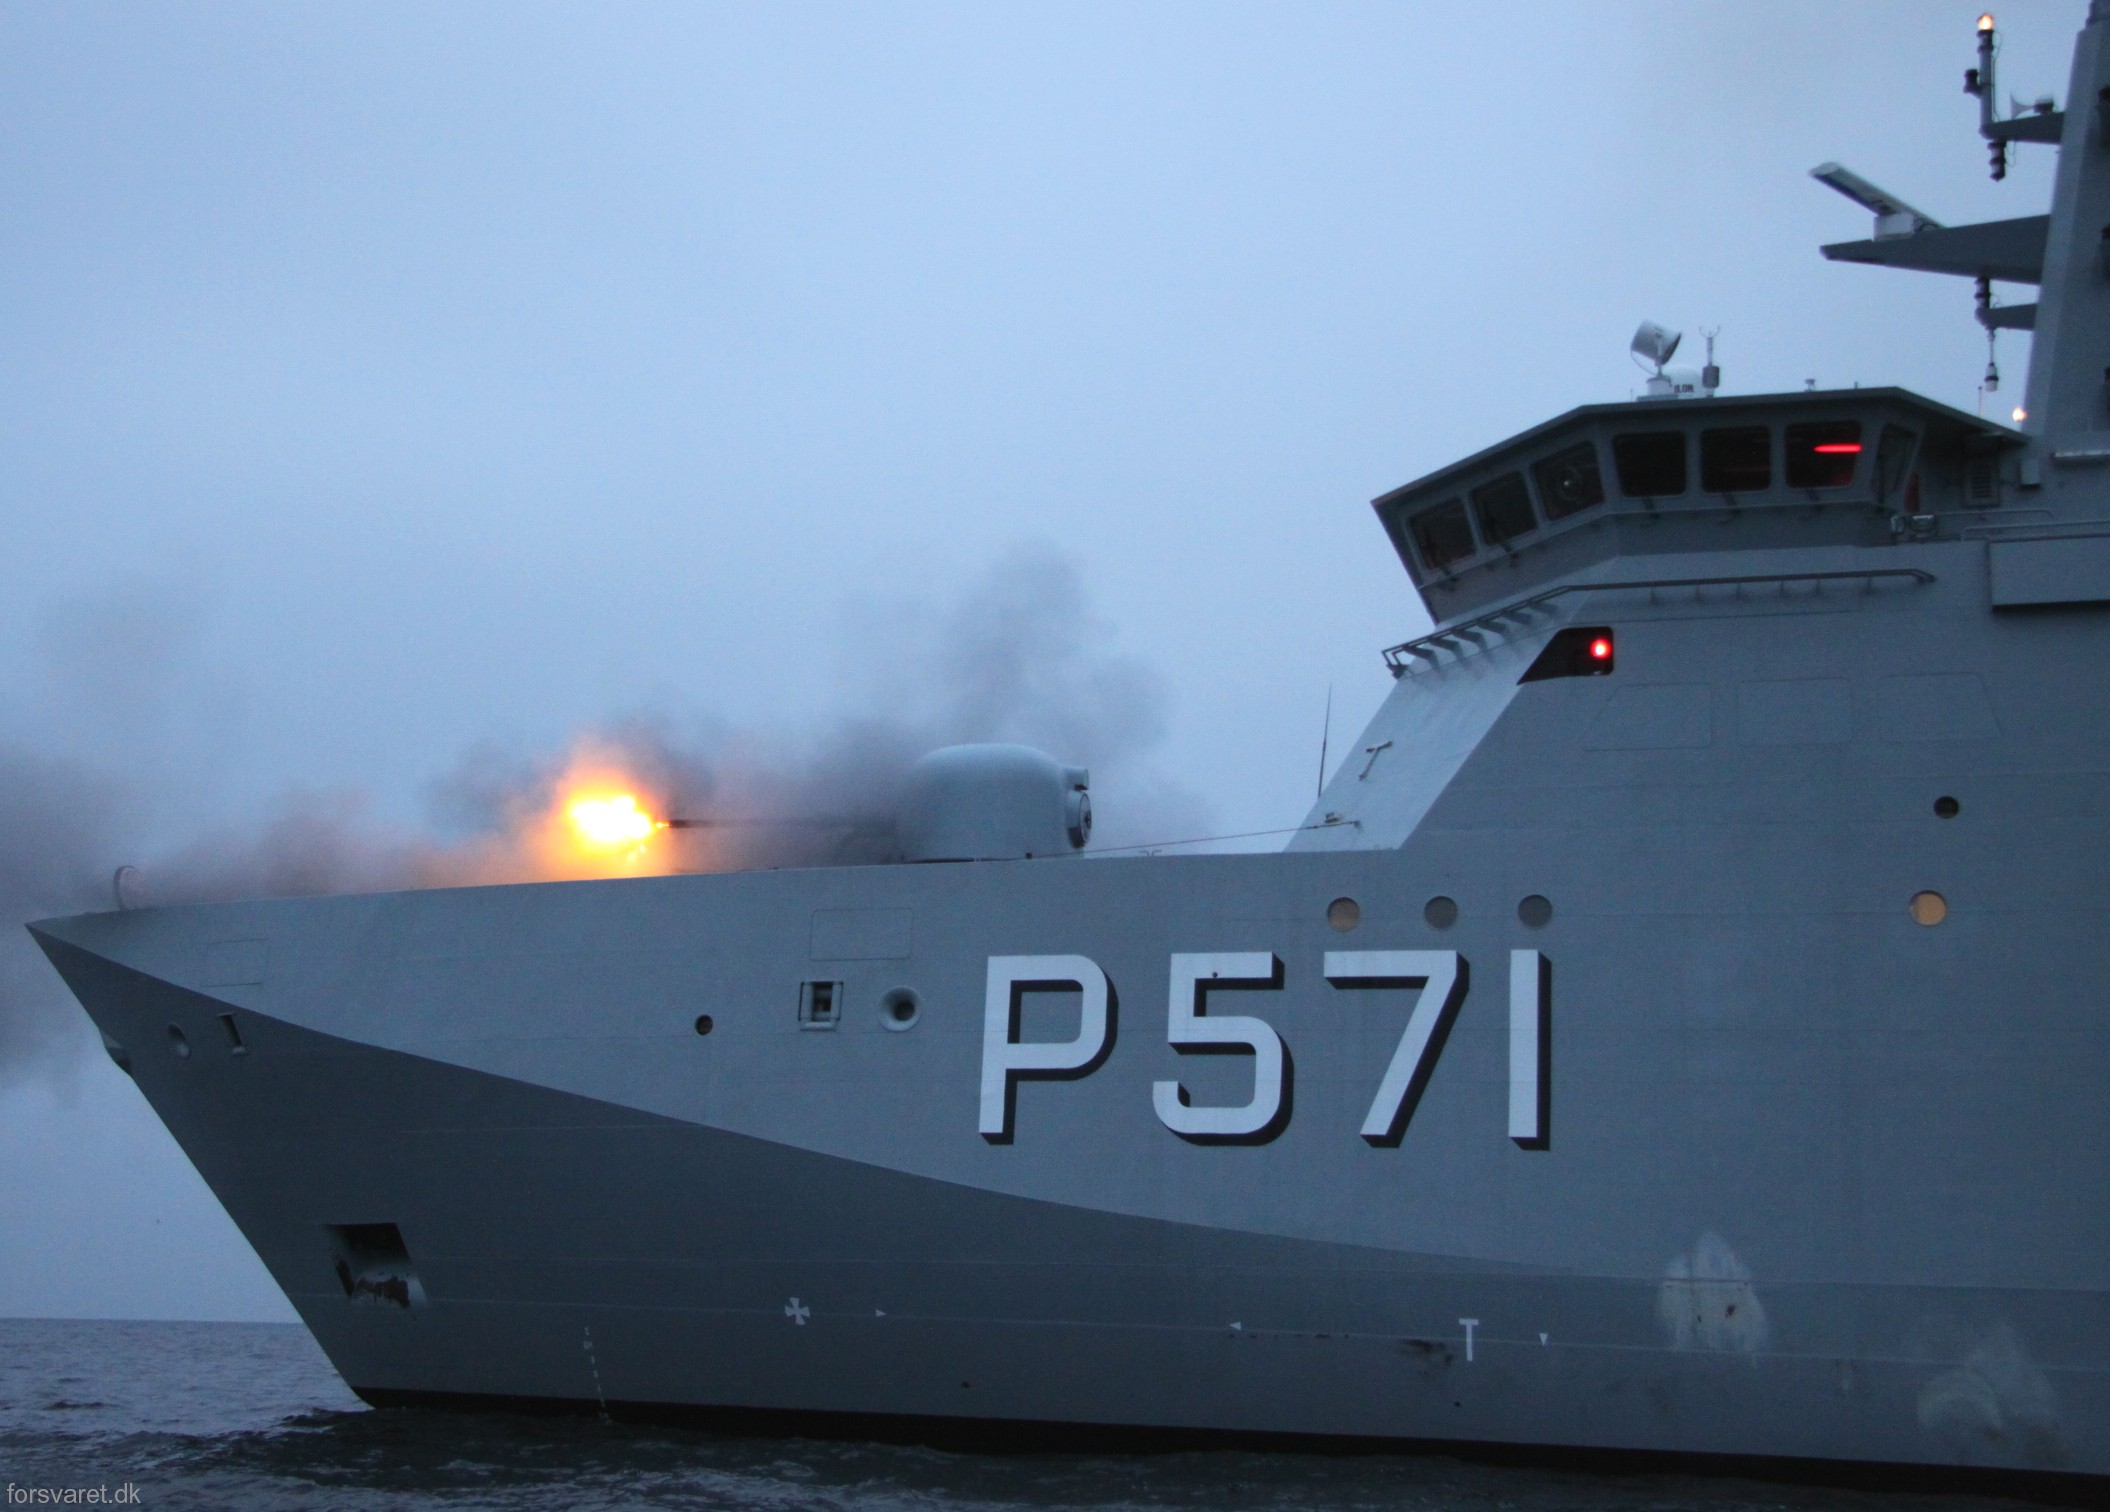 p-571 hdms ejnar mikkelsen knud rasmussen class offshore patrol vessel opv royal danish navy inspektionsfartøj 09